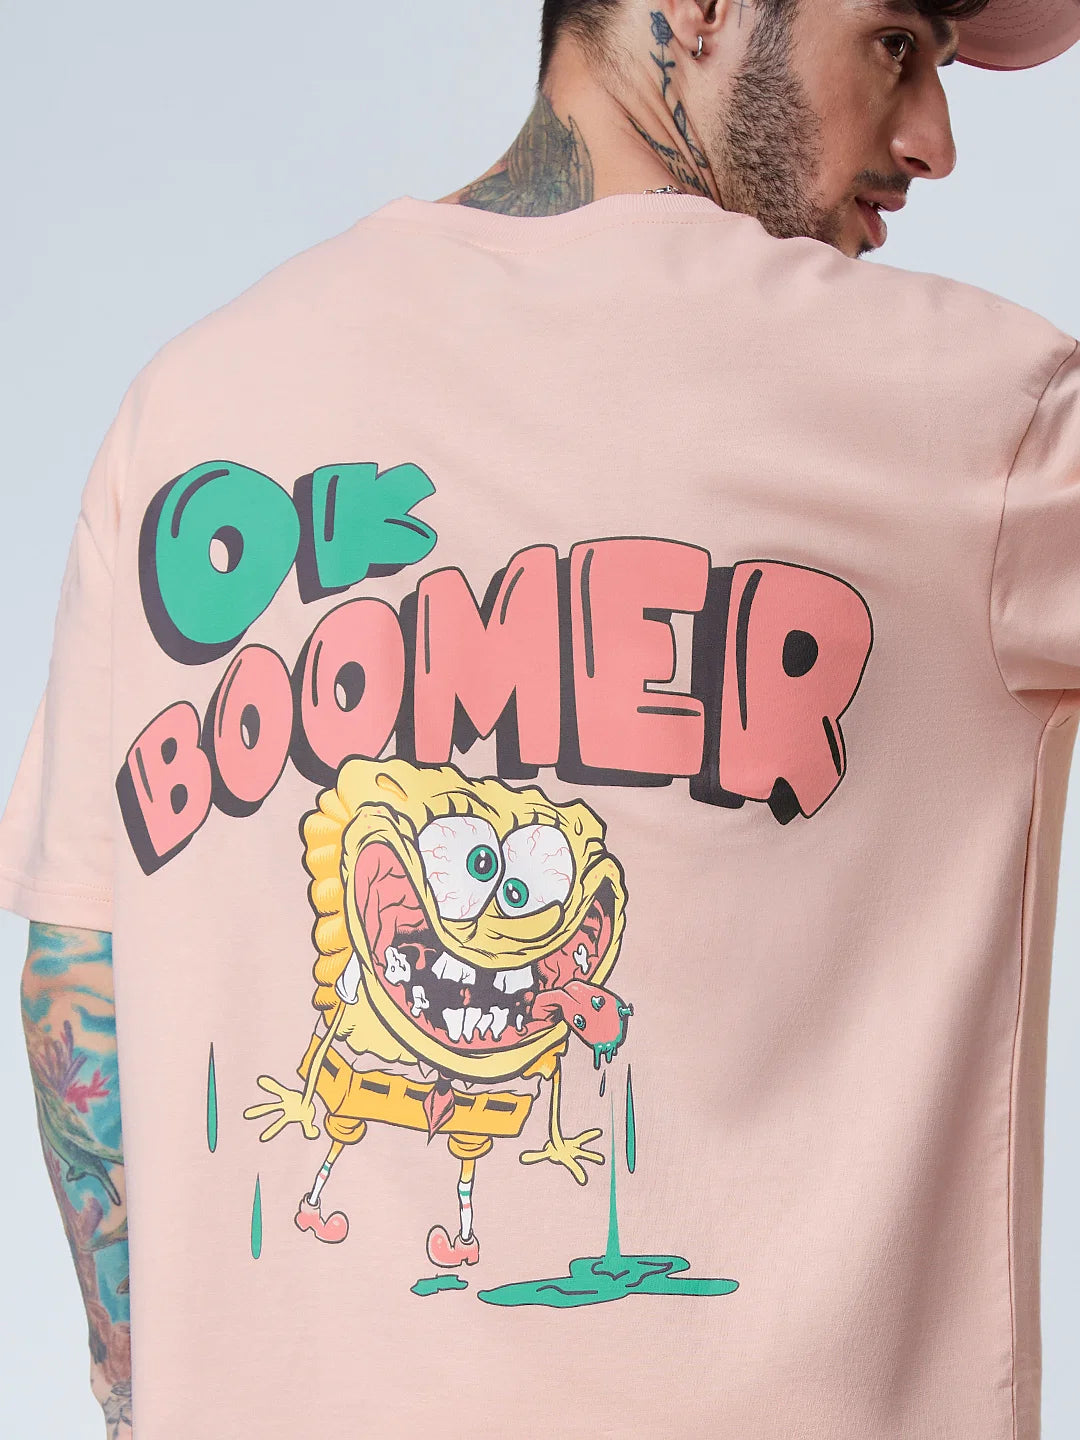 SpongeBob Ok Boomer (UK version)